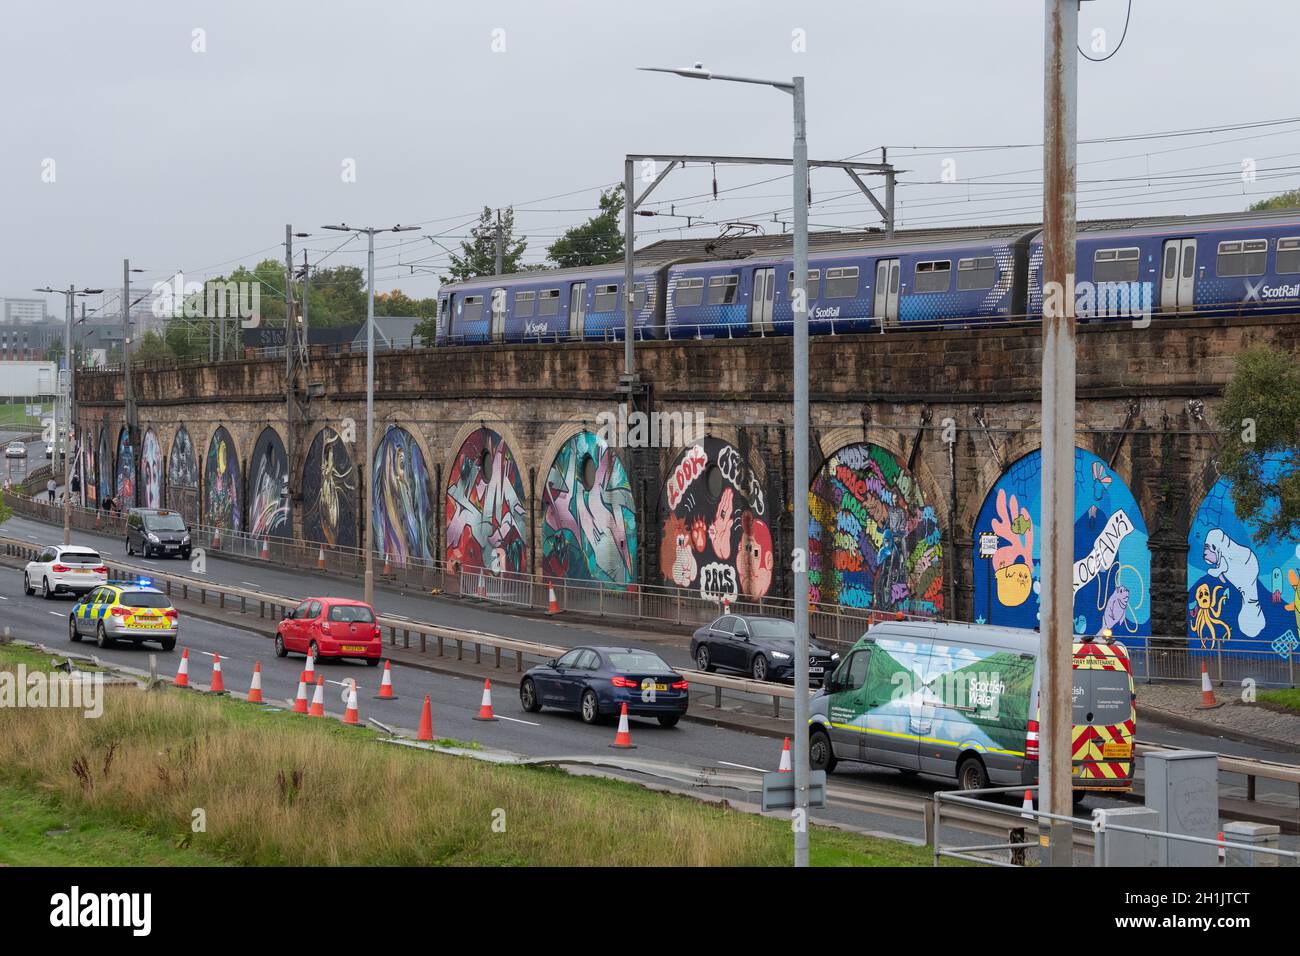 Clydeside Expressway Mural Wall, Glasgow, Scotland, UK Stock Photo